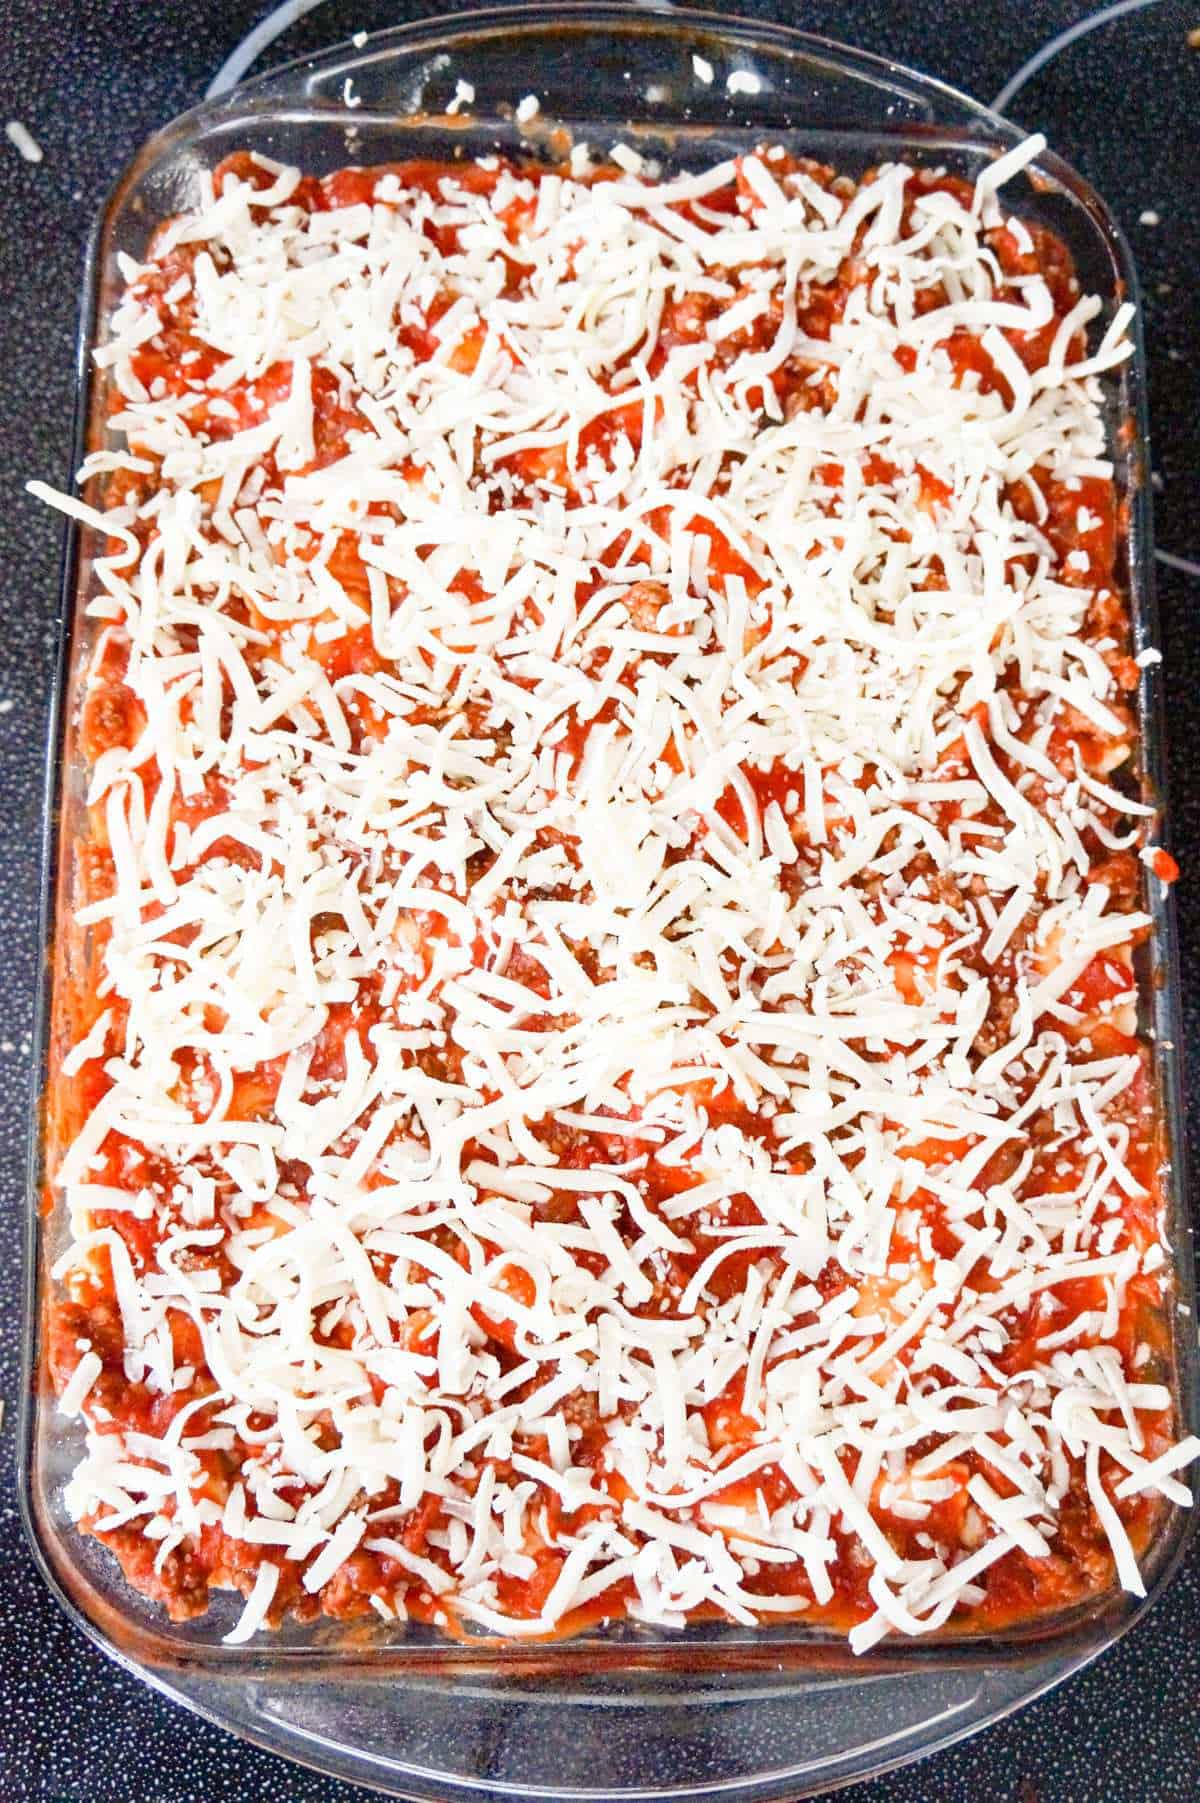 shredded mozzarella on top of ravioli lasagna before baking